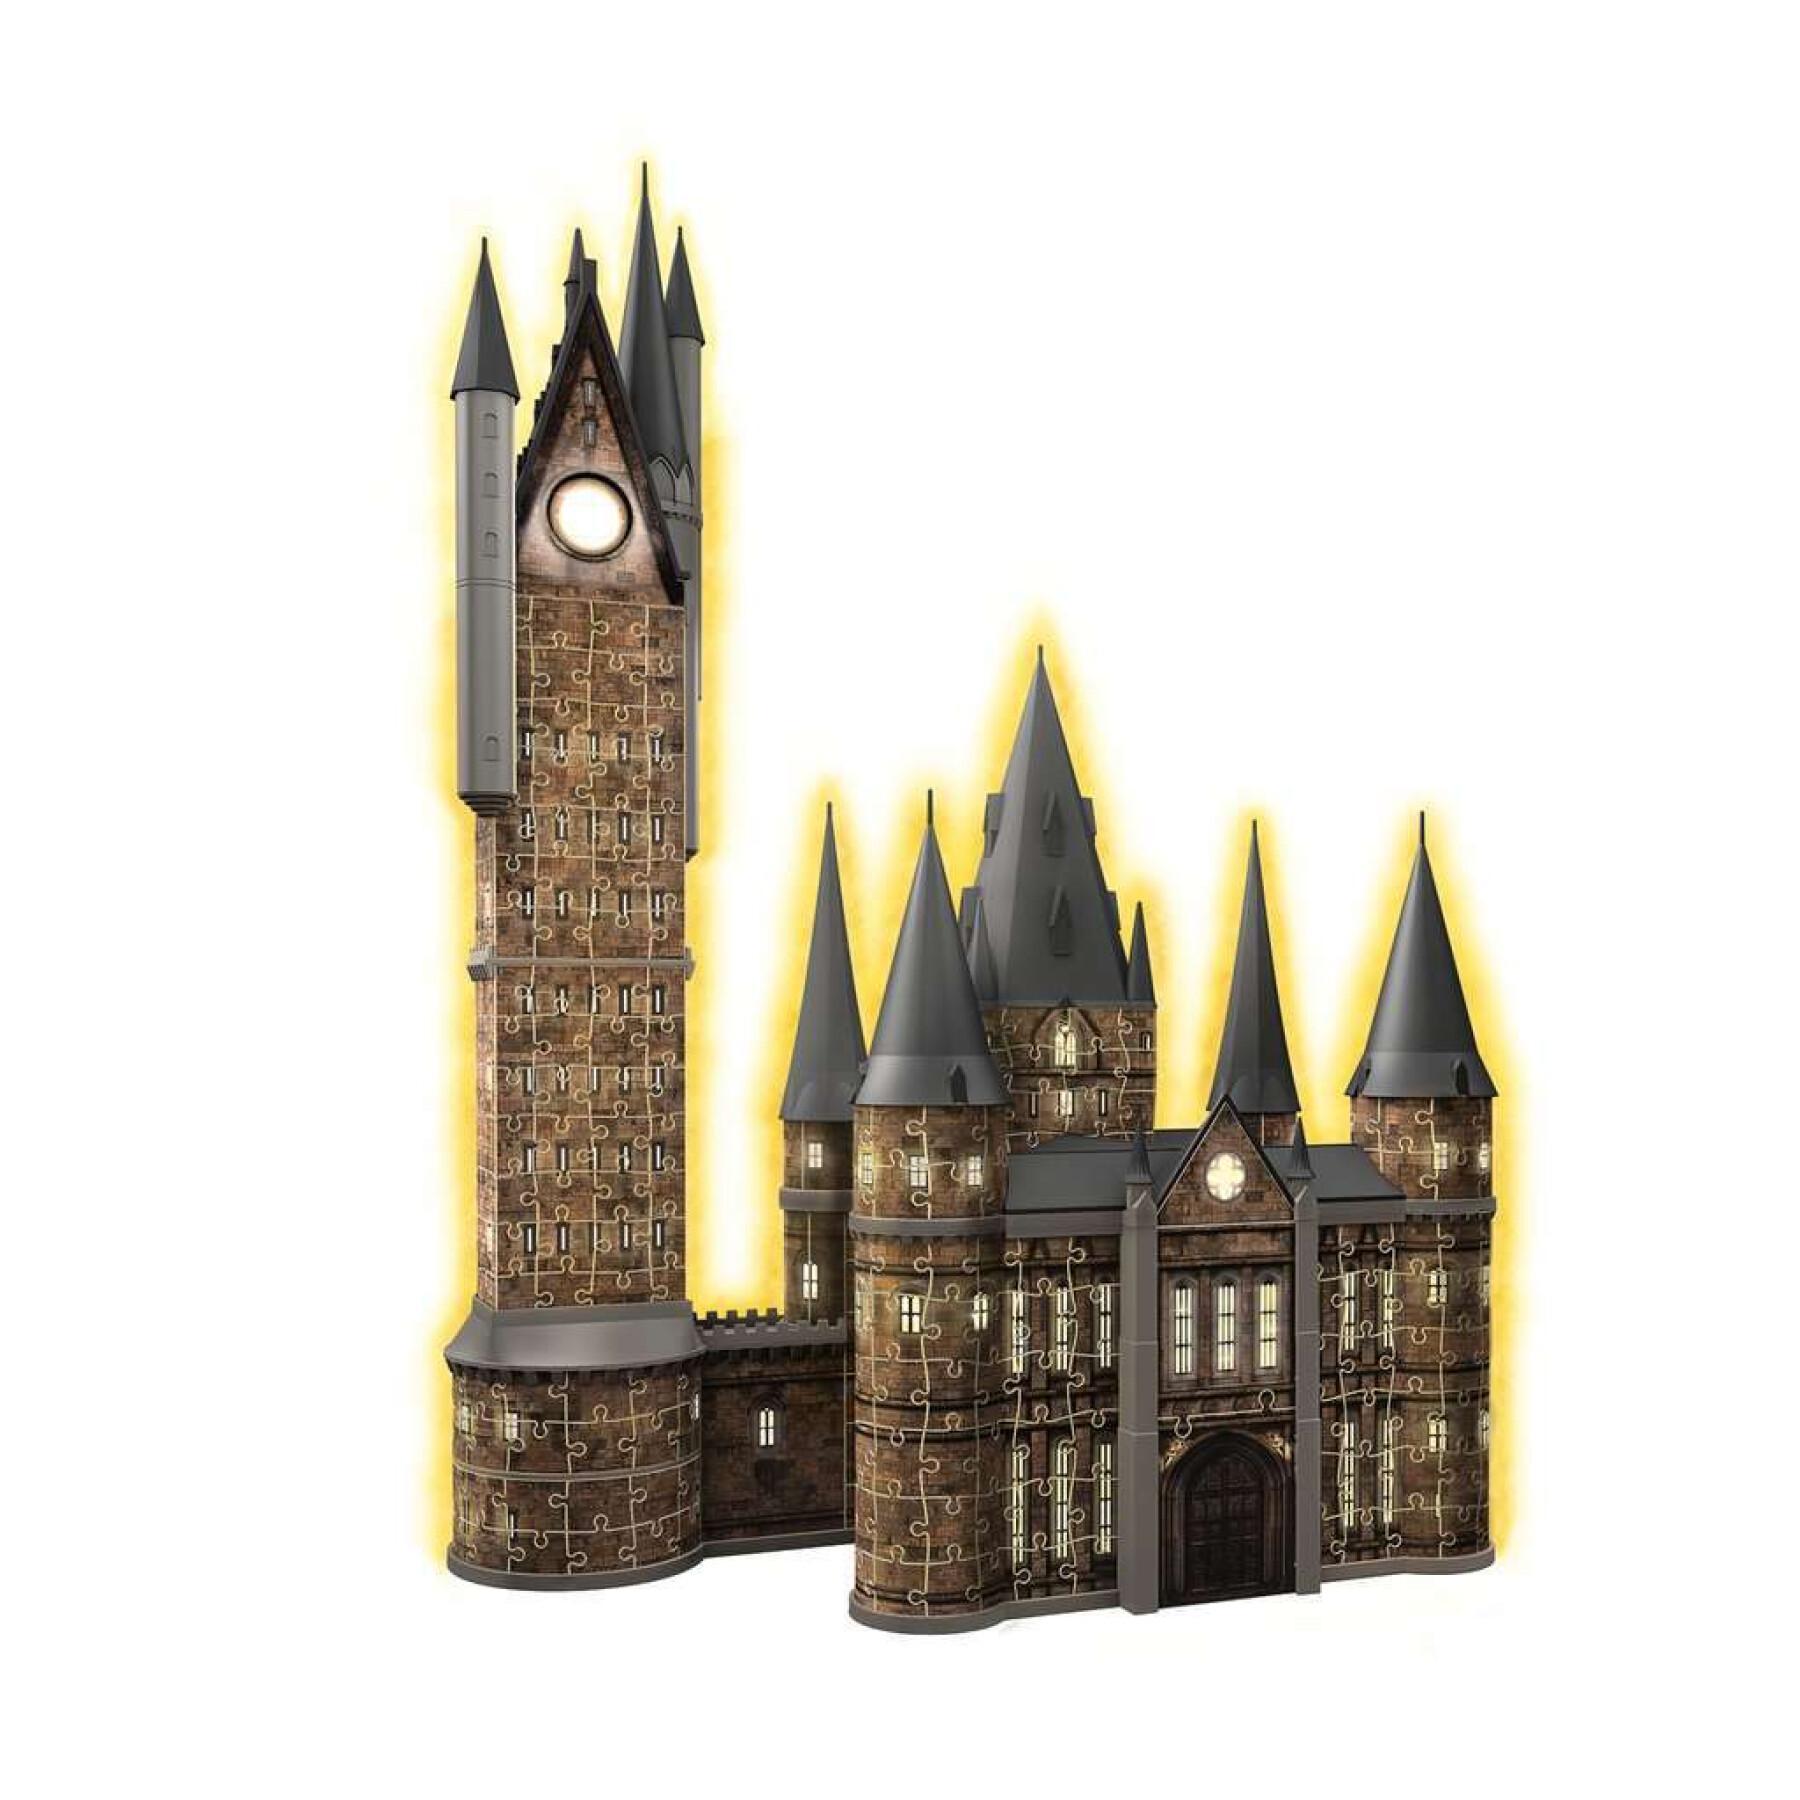 3d puzzle illuminated hogwarts castle - the astronomy tower Ravensburger Harry Potter